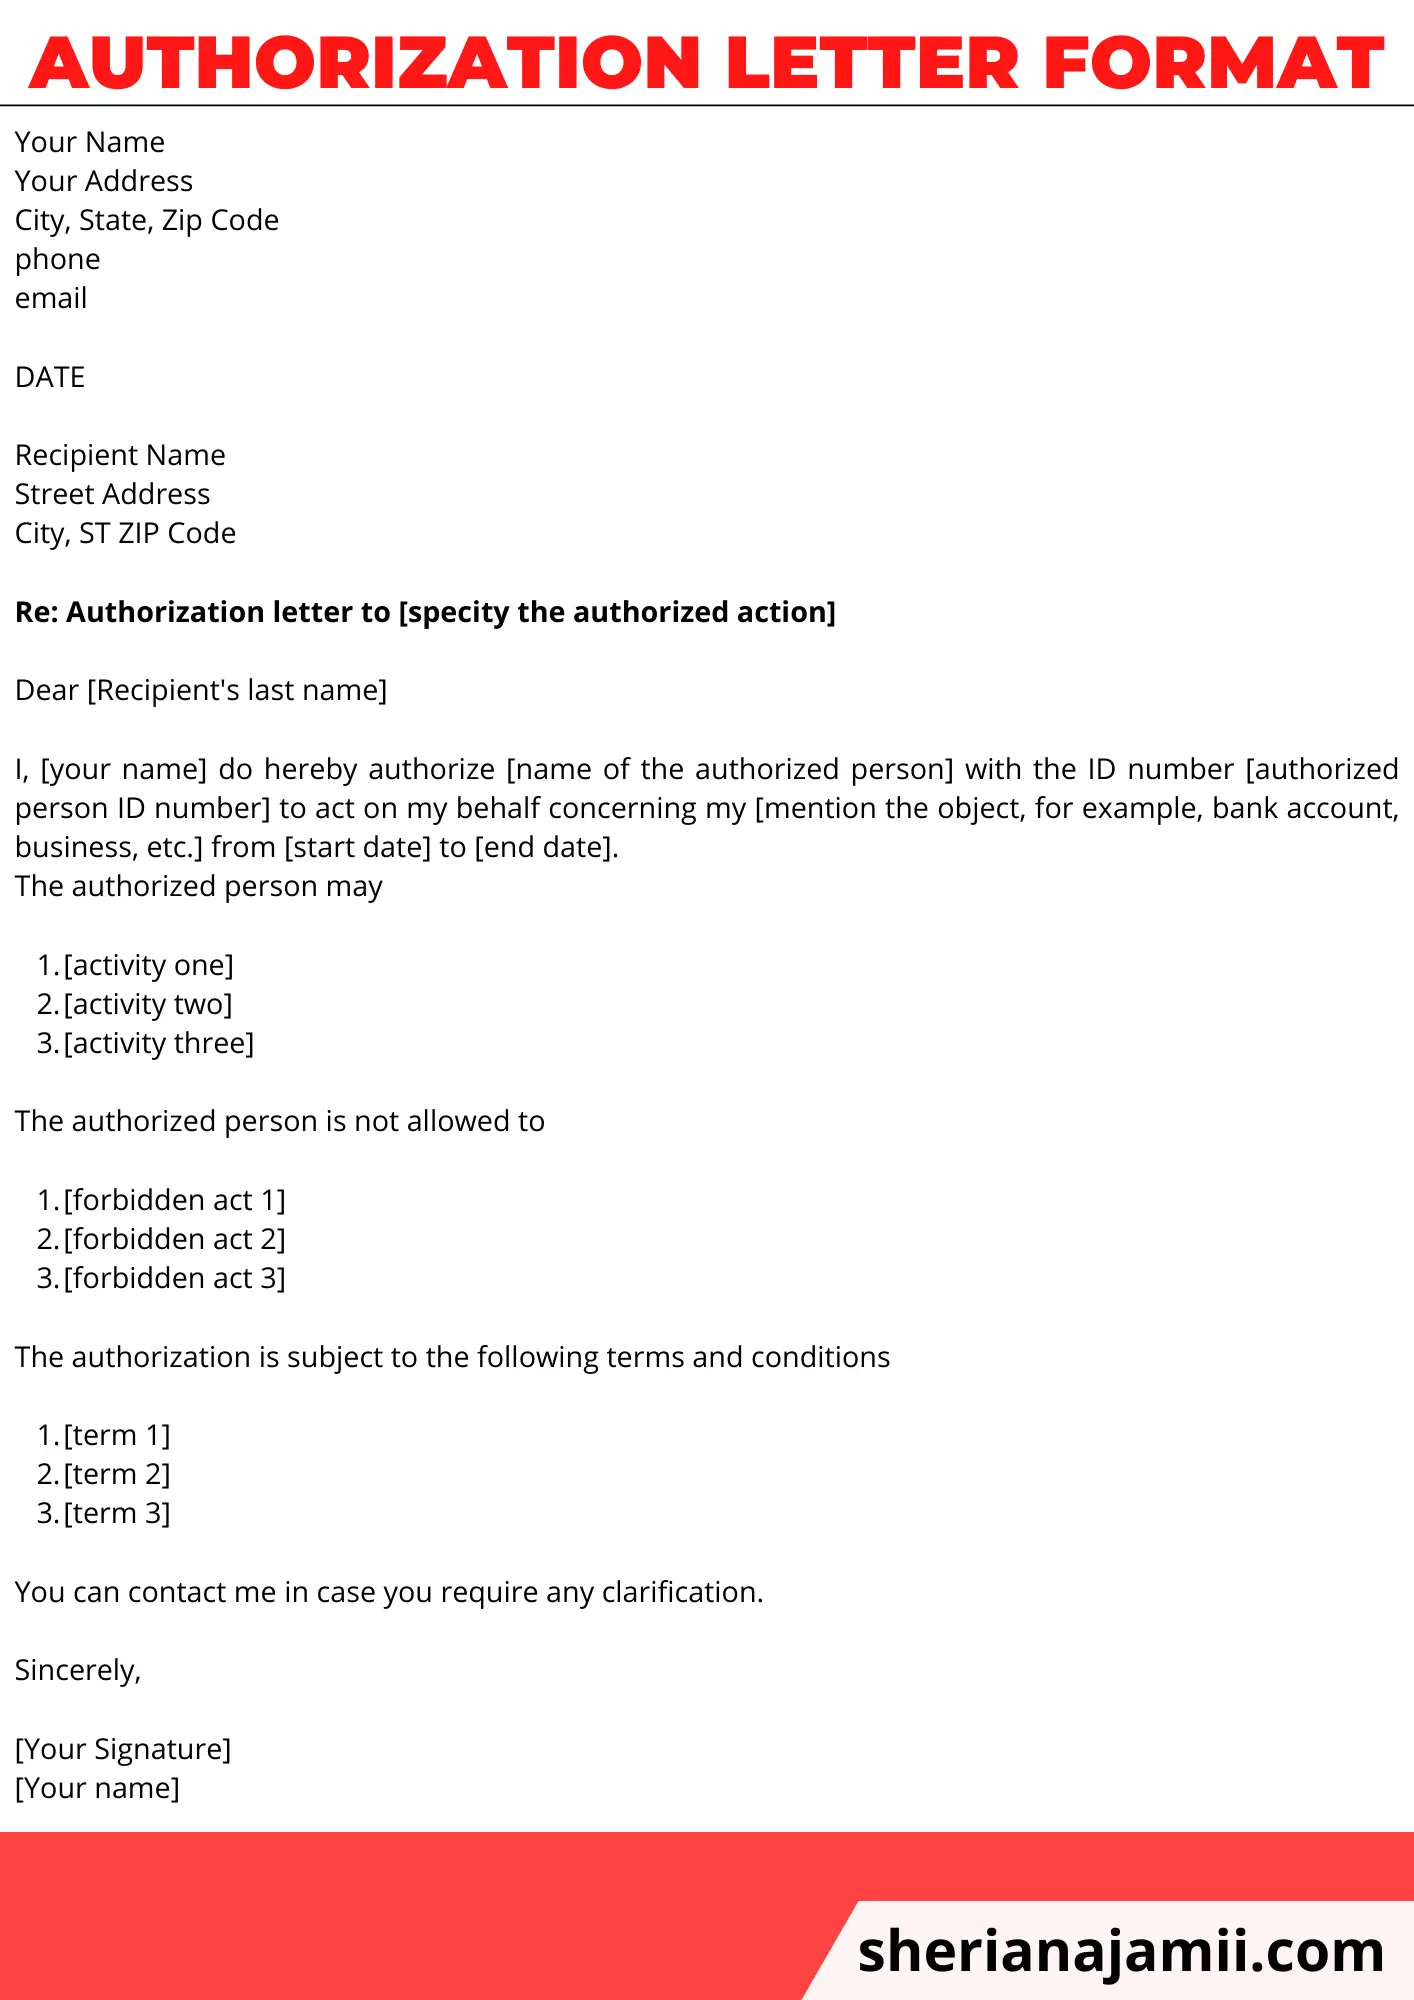 authorization letter format, template authorization letter 